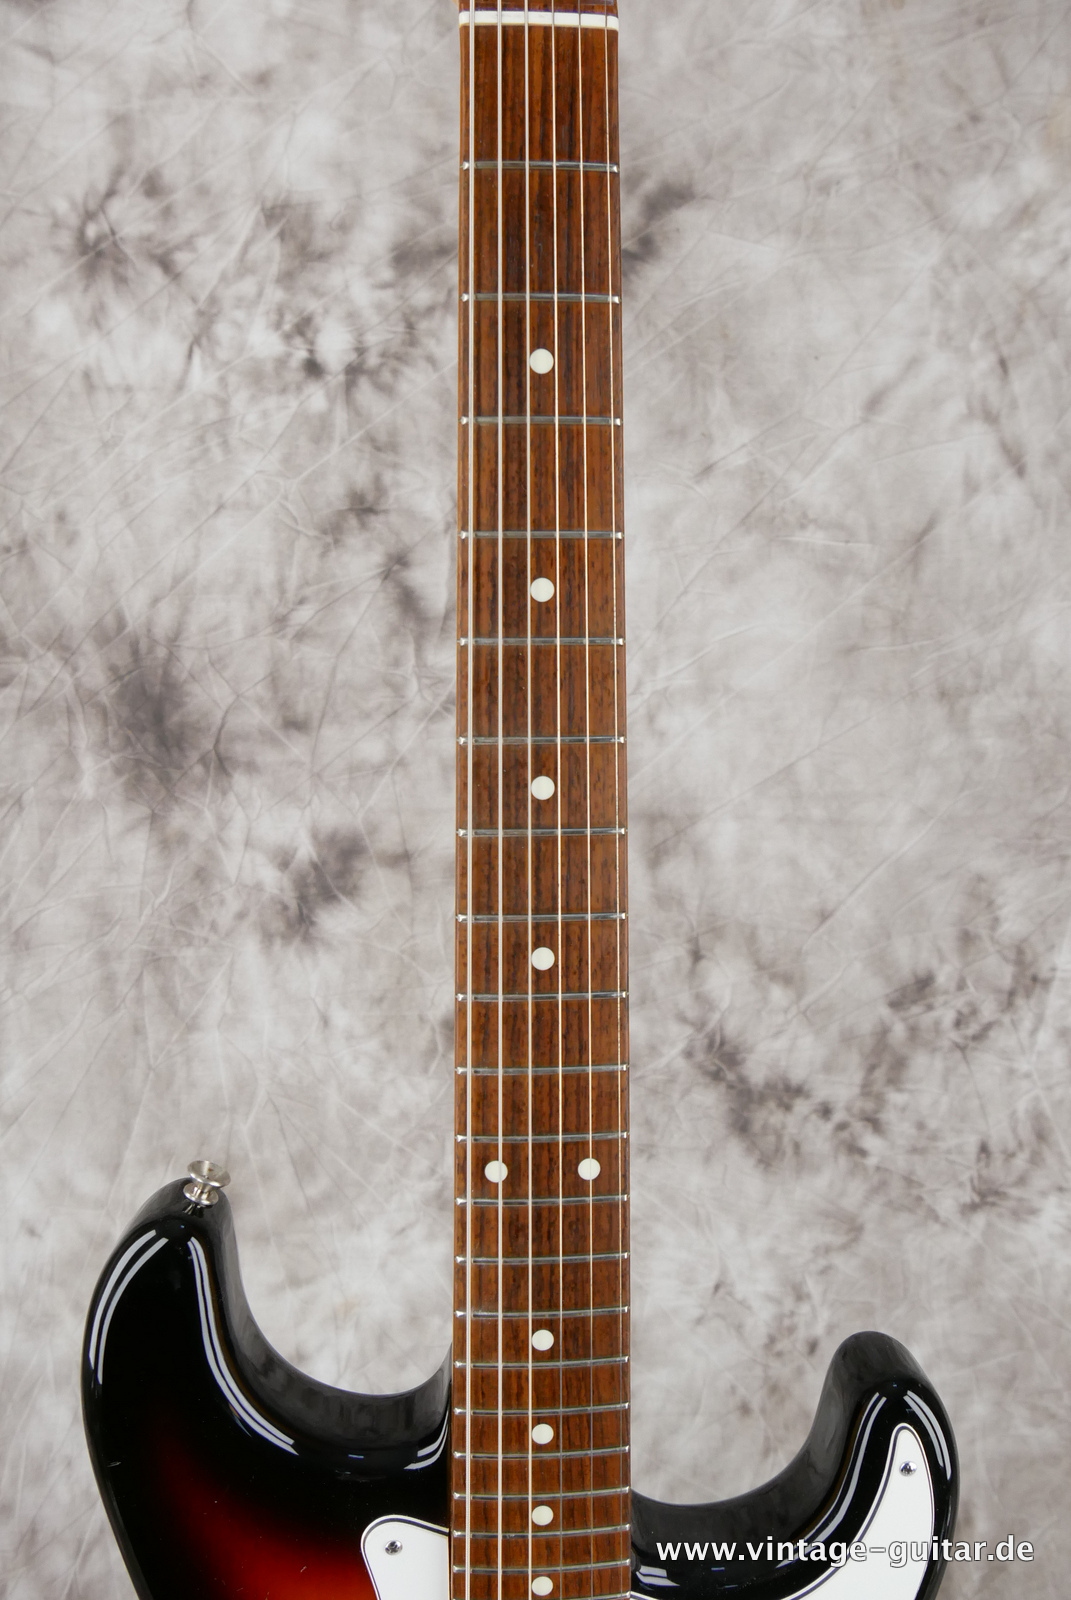 Fender_Stratocaster_crafted_in_Japan_sunburst_two_piont_tromolo_3,76kg-007.JPG